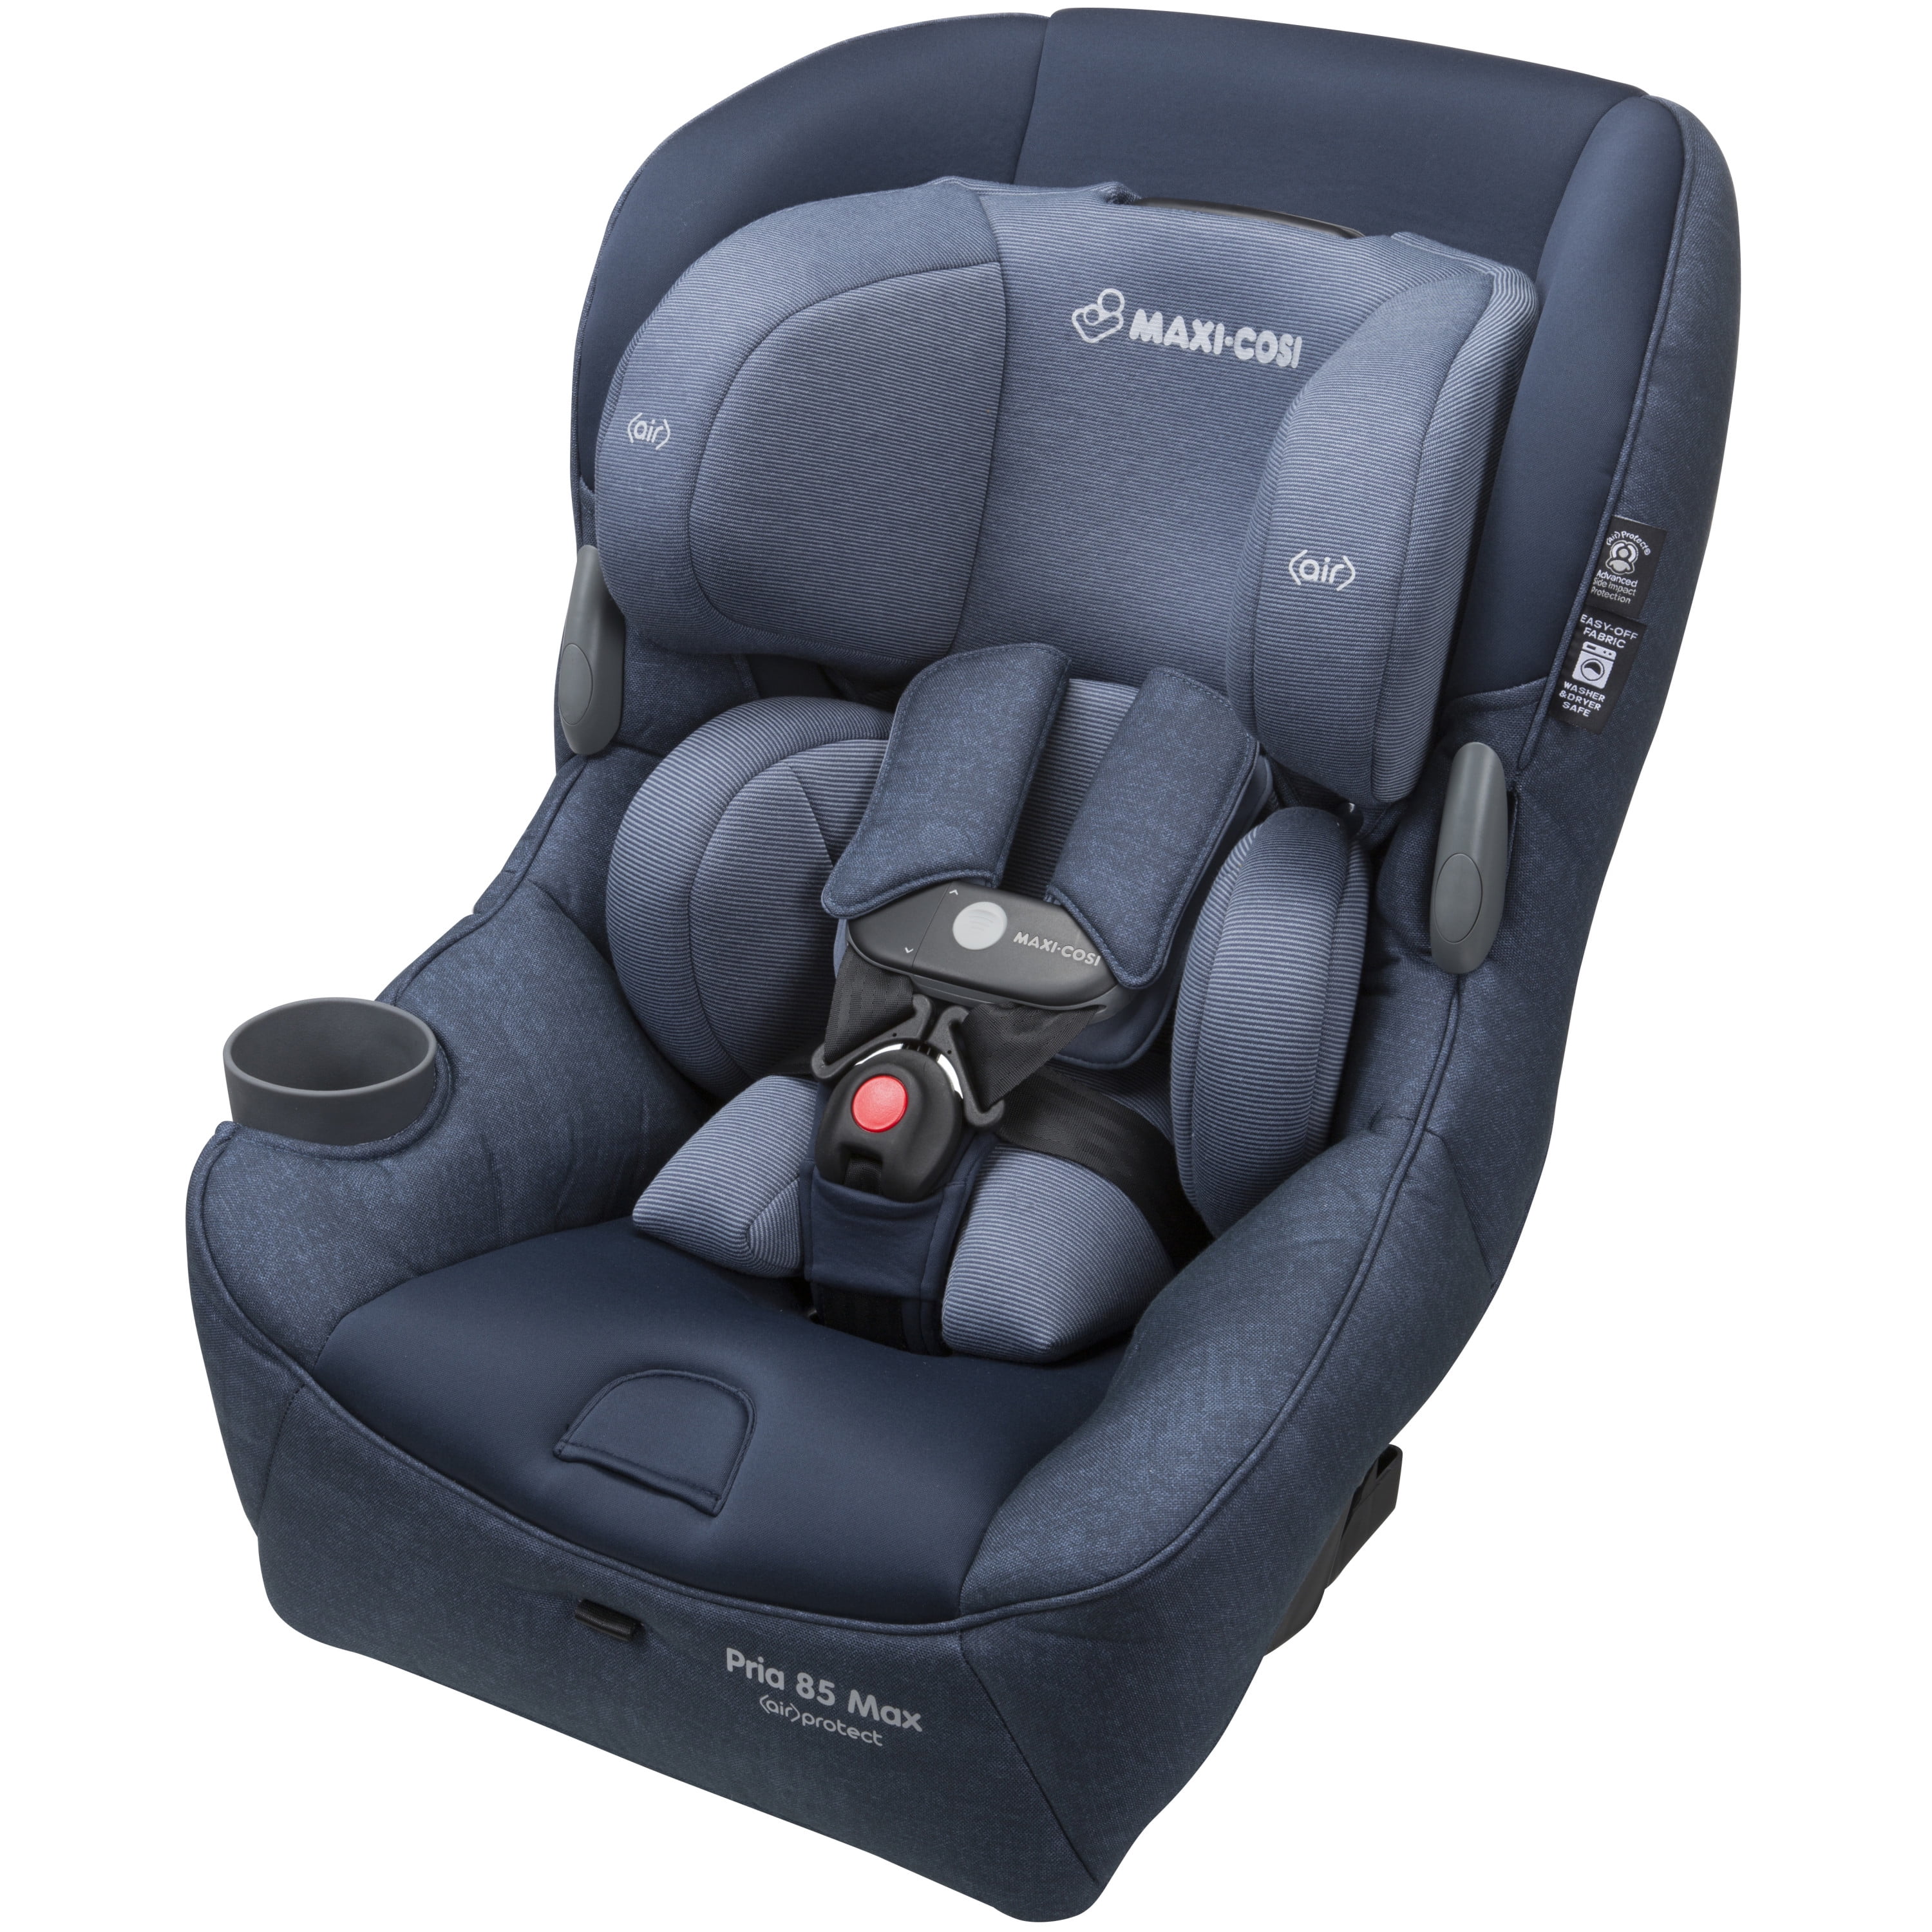 Maxi-cosi ic302etka Nomad Mico Max 30 Plush Infant Rear facing car Seat